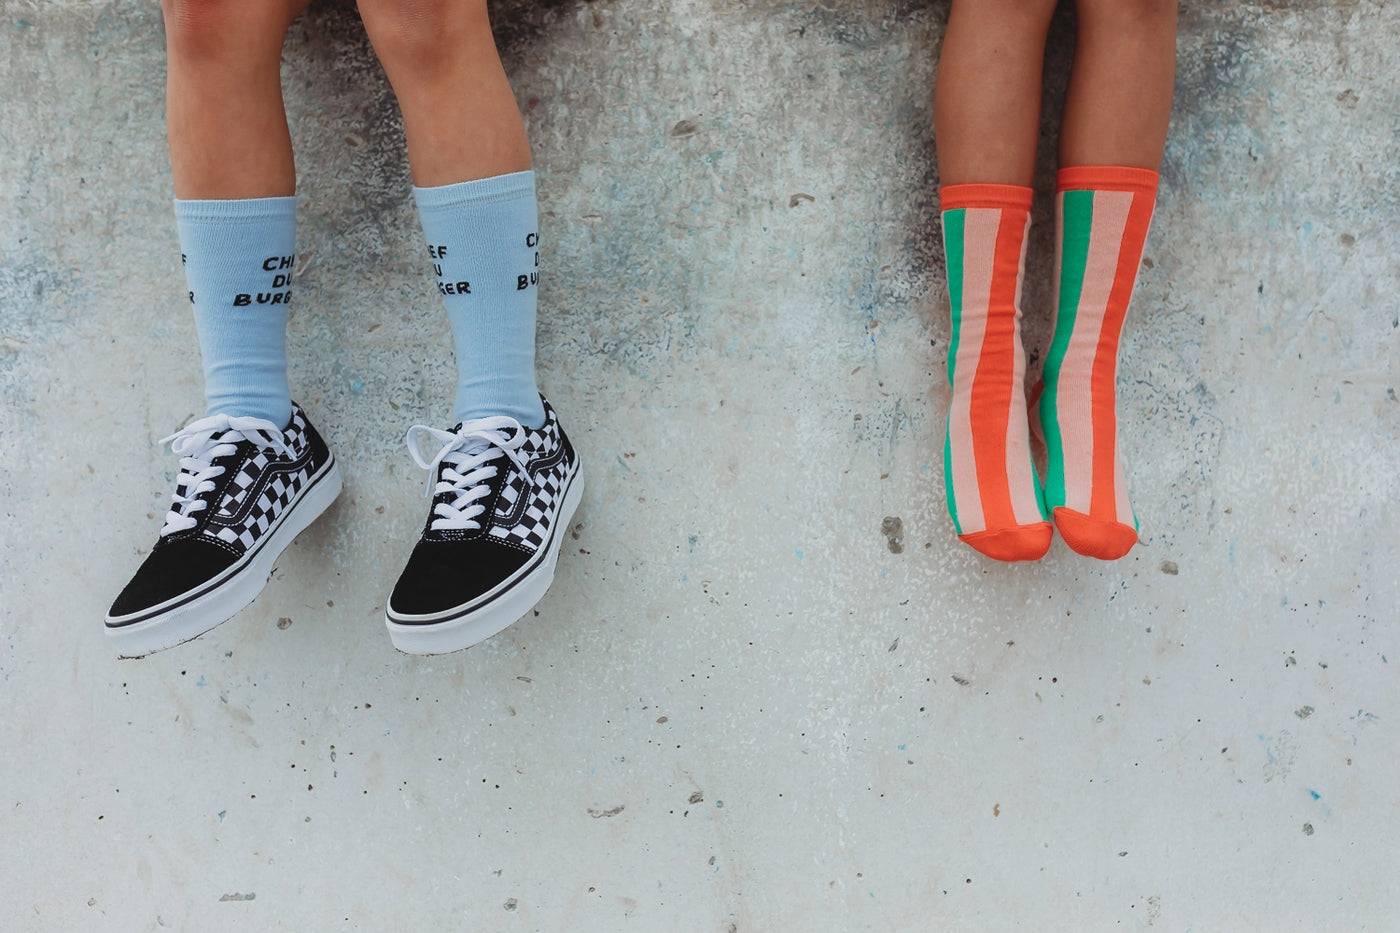 【SPROET&SPROUT】【30%OFF】Socks stripe Blossom 靴下 9-18M,1.5-3Y,4-6Y,7-9Y,10-12Y  | Coucoubebe/ククベベ